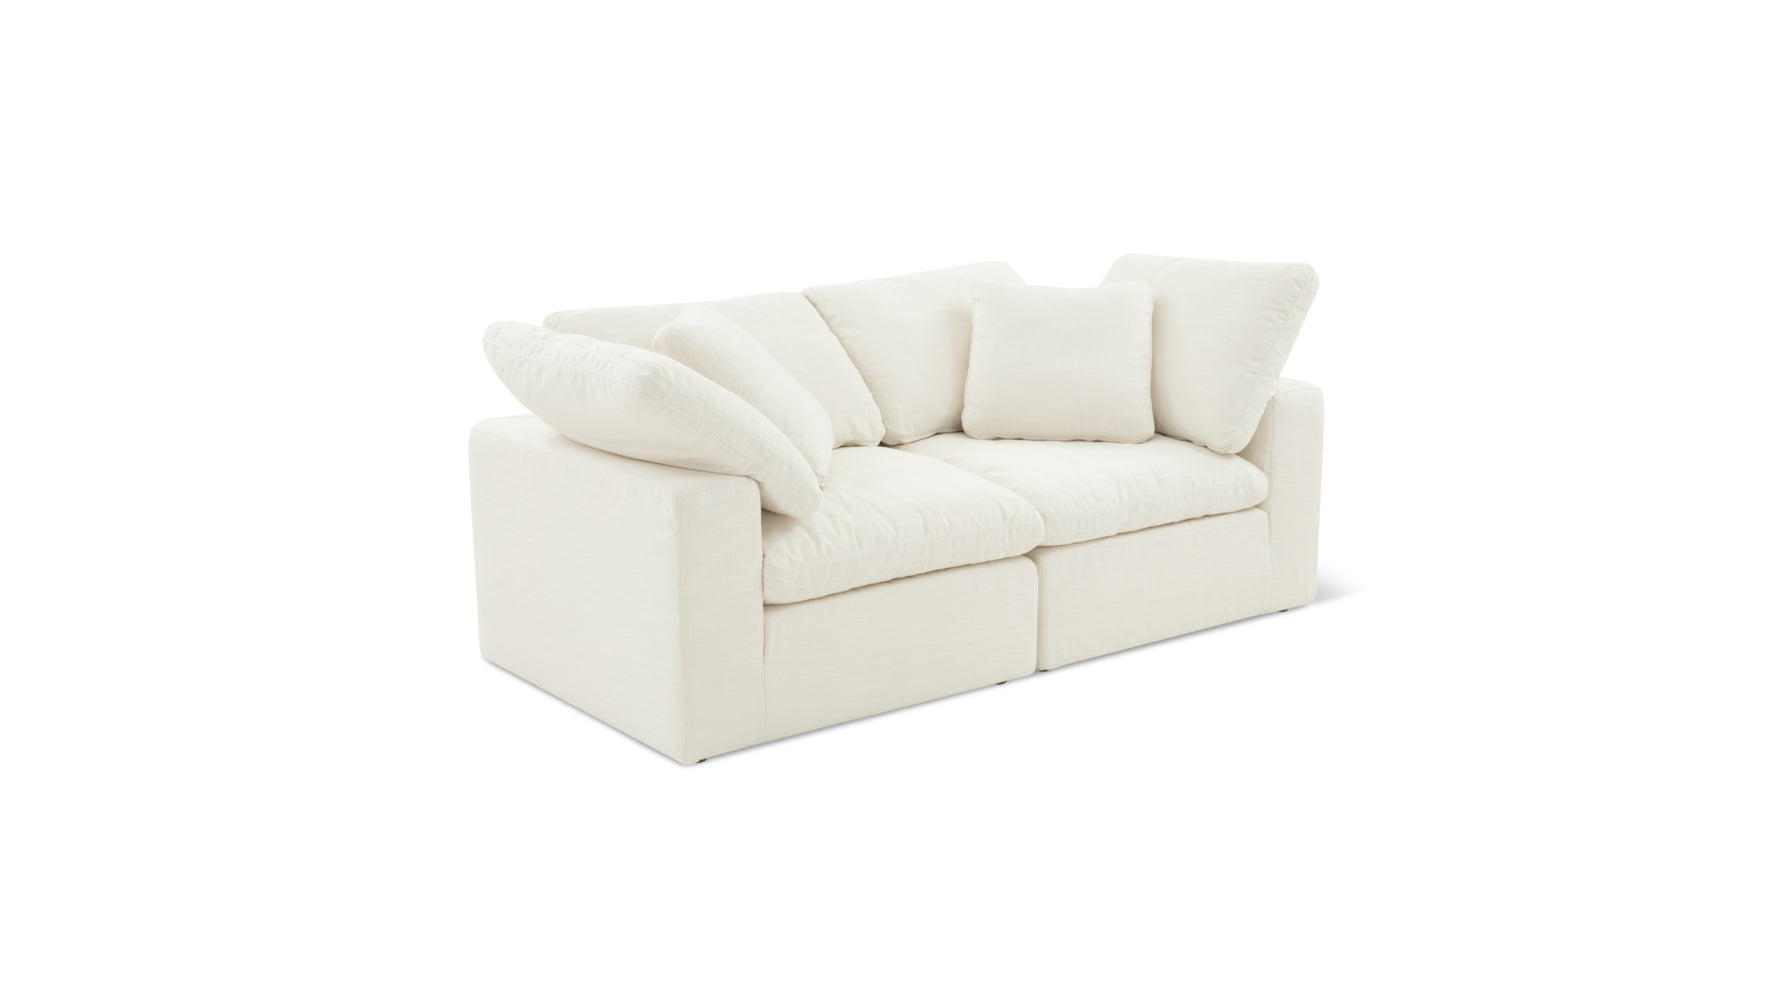 Movie Night™ 2-Piece Modular Sofa, Standard, Cream Linen - Image 4